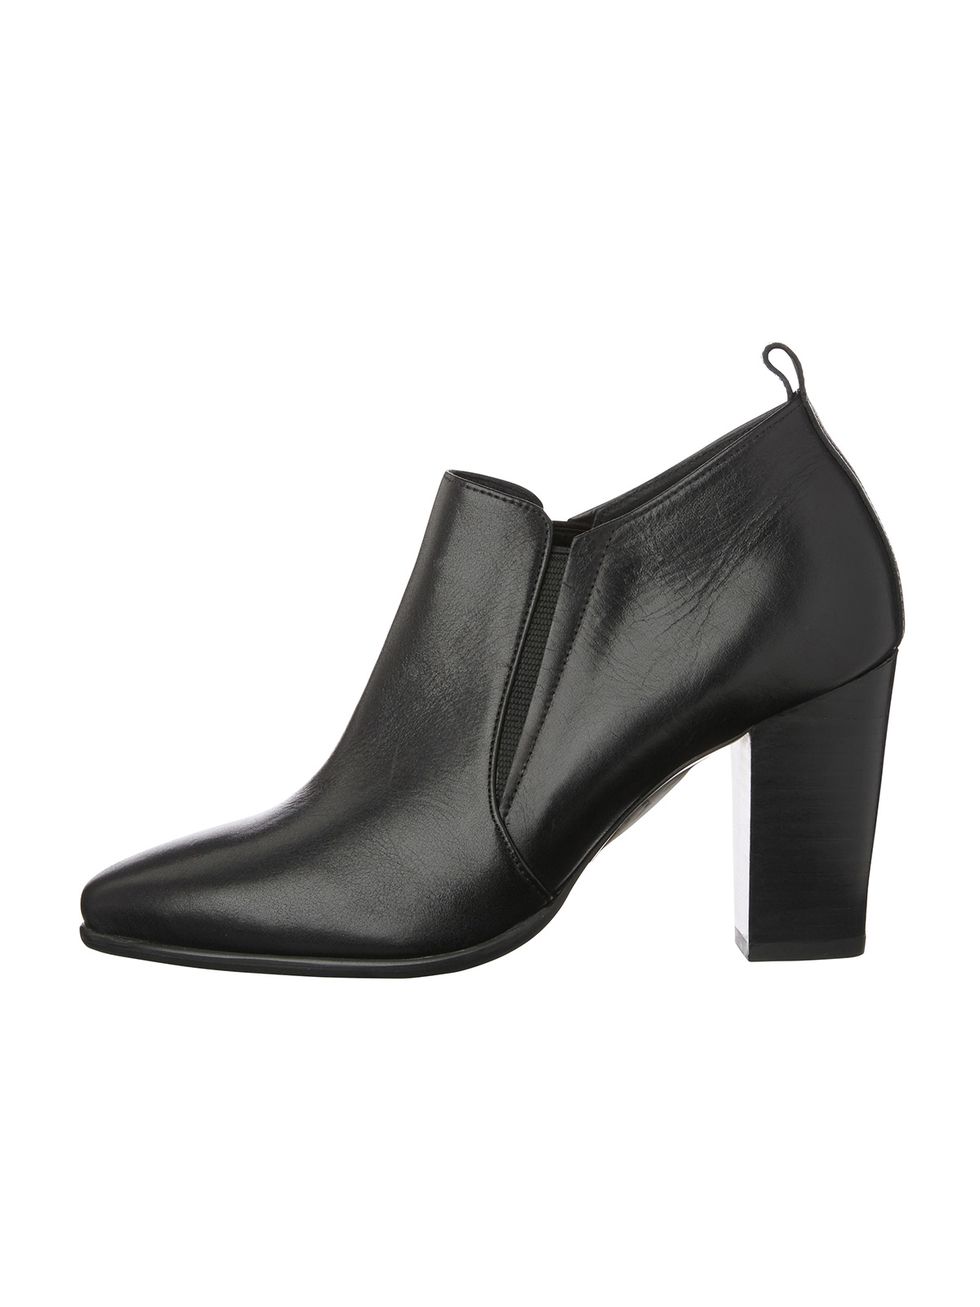 Black, Leather, Beige, High heels, Fashion design, Basic pump, Silver, Dancing shoe, Court shoe, Boot, 